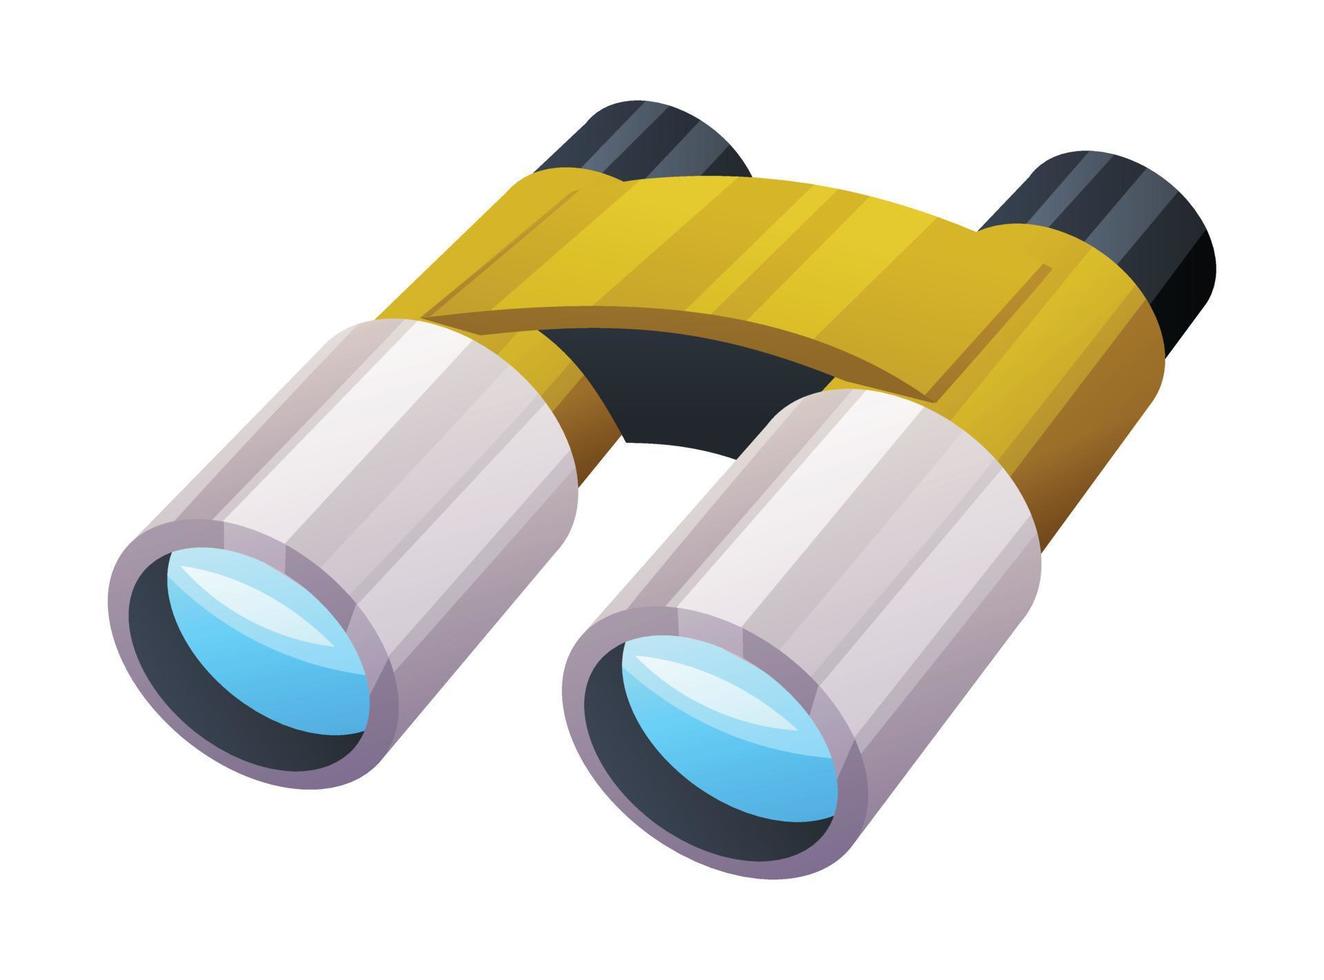 Binoculars vector illustration isolated on white background